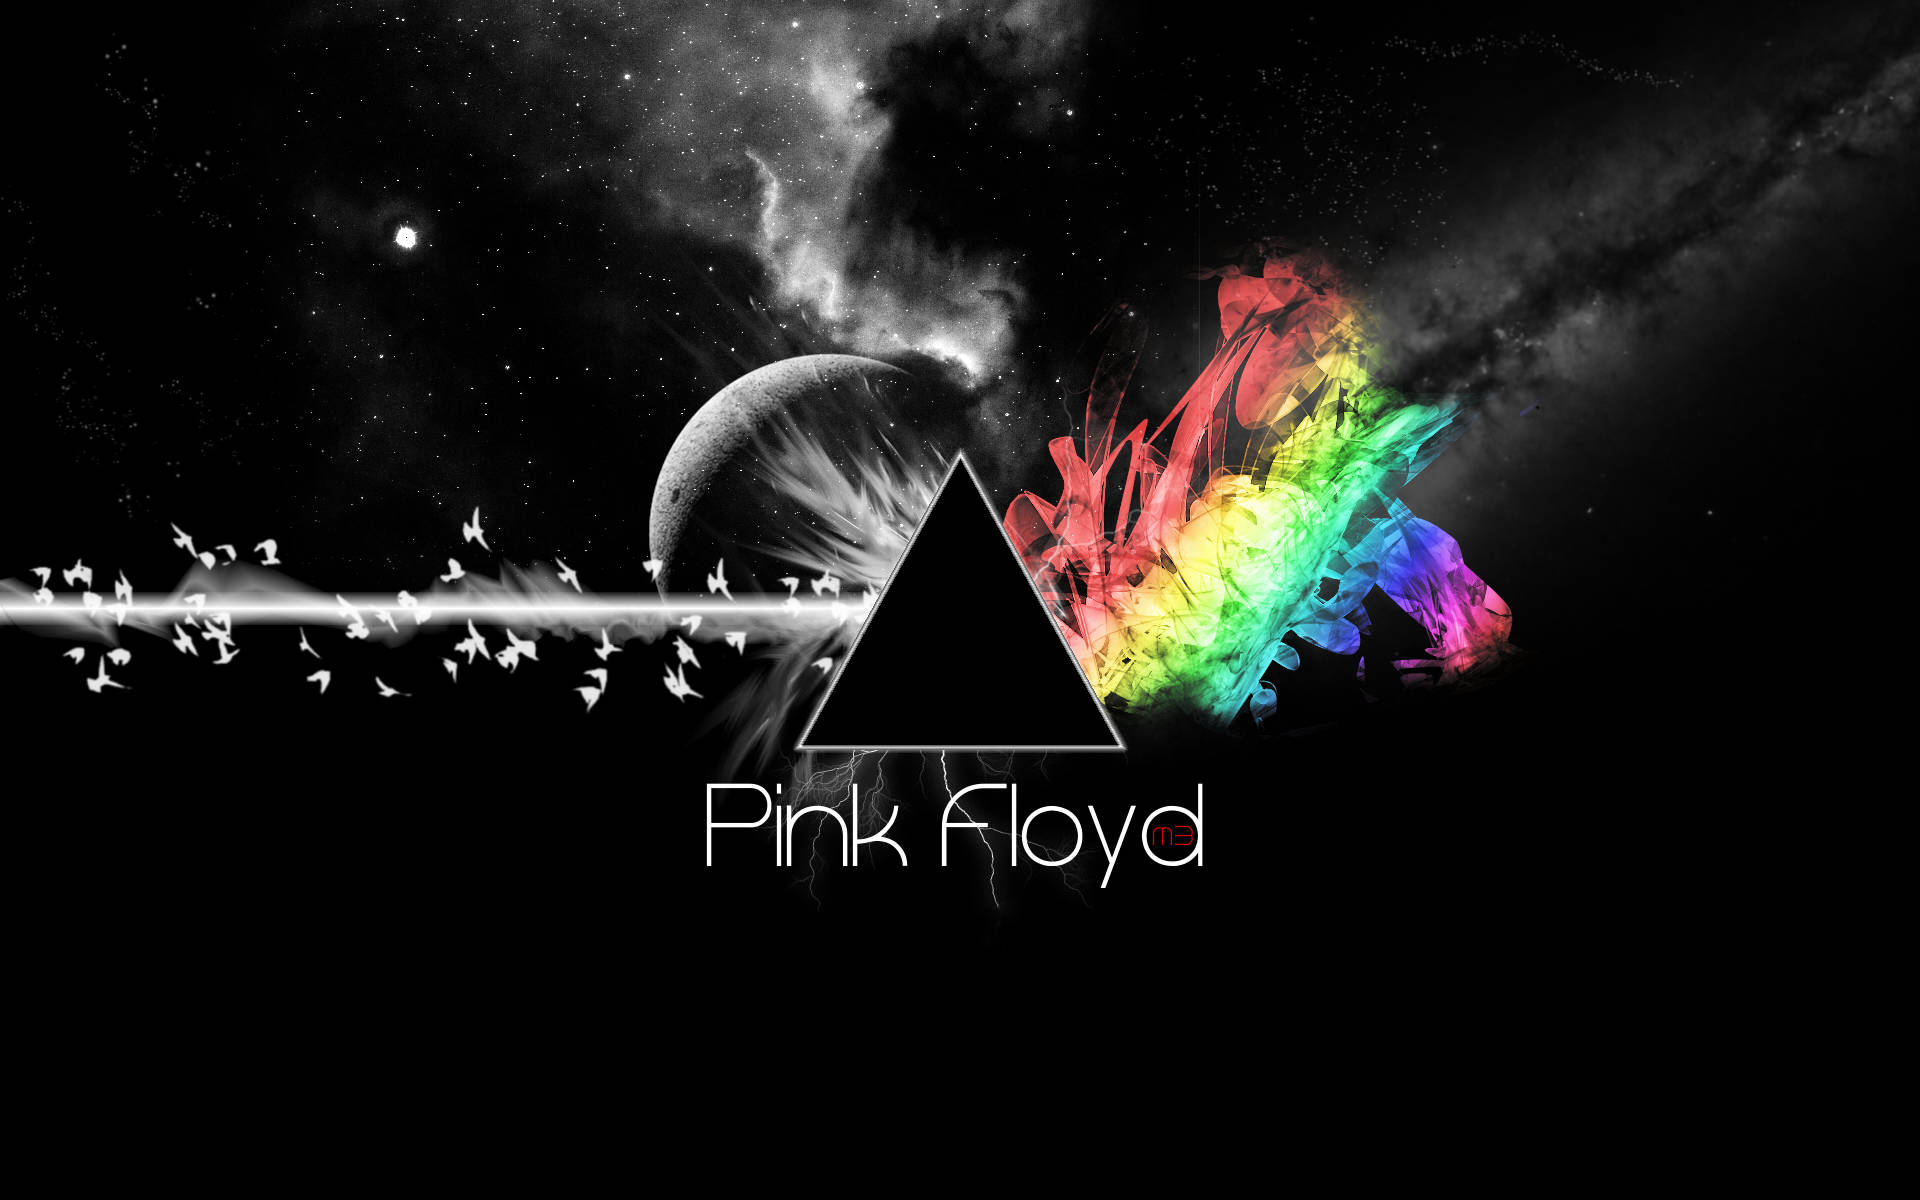 pink floyd echoes album art